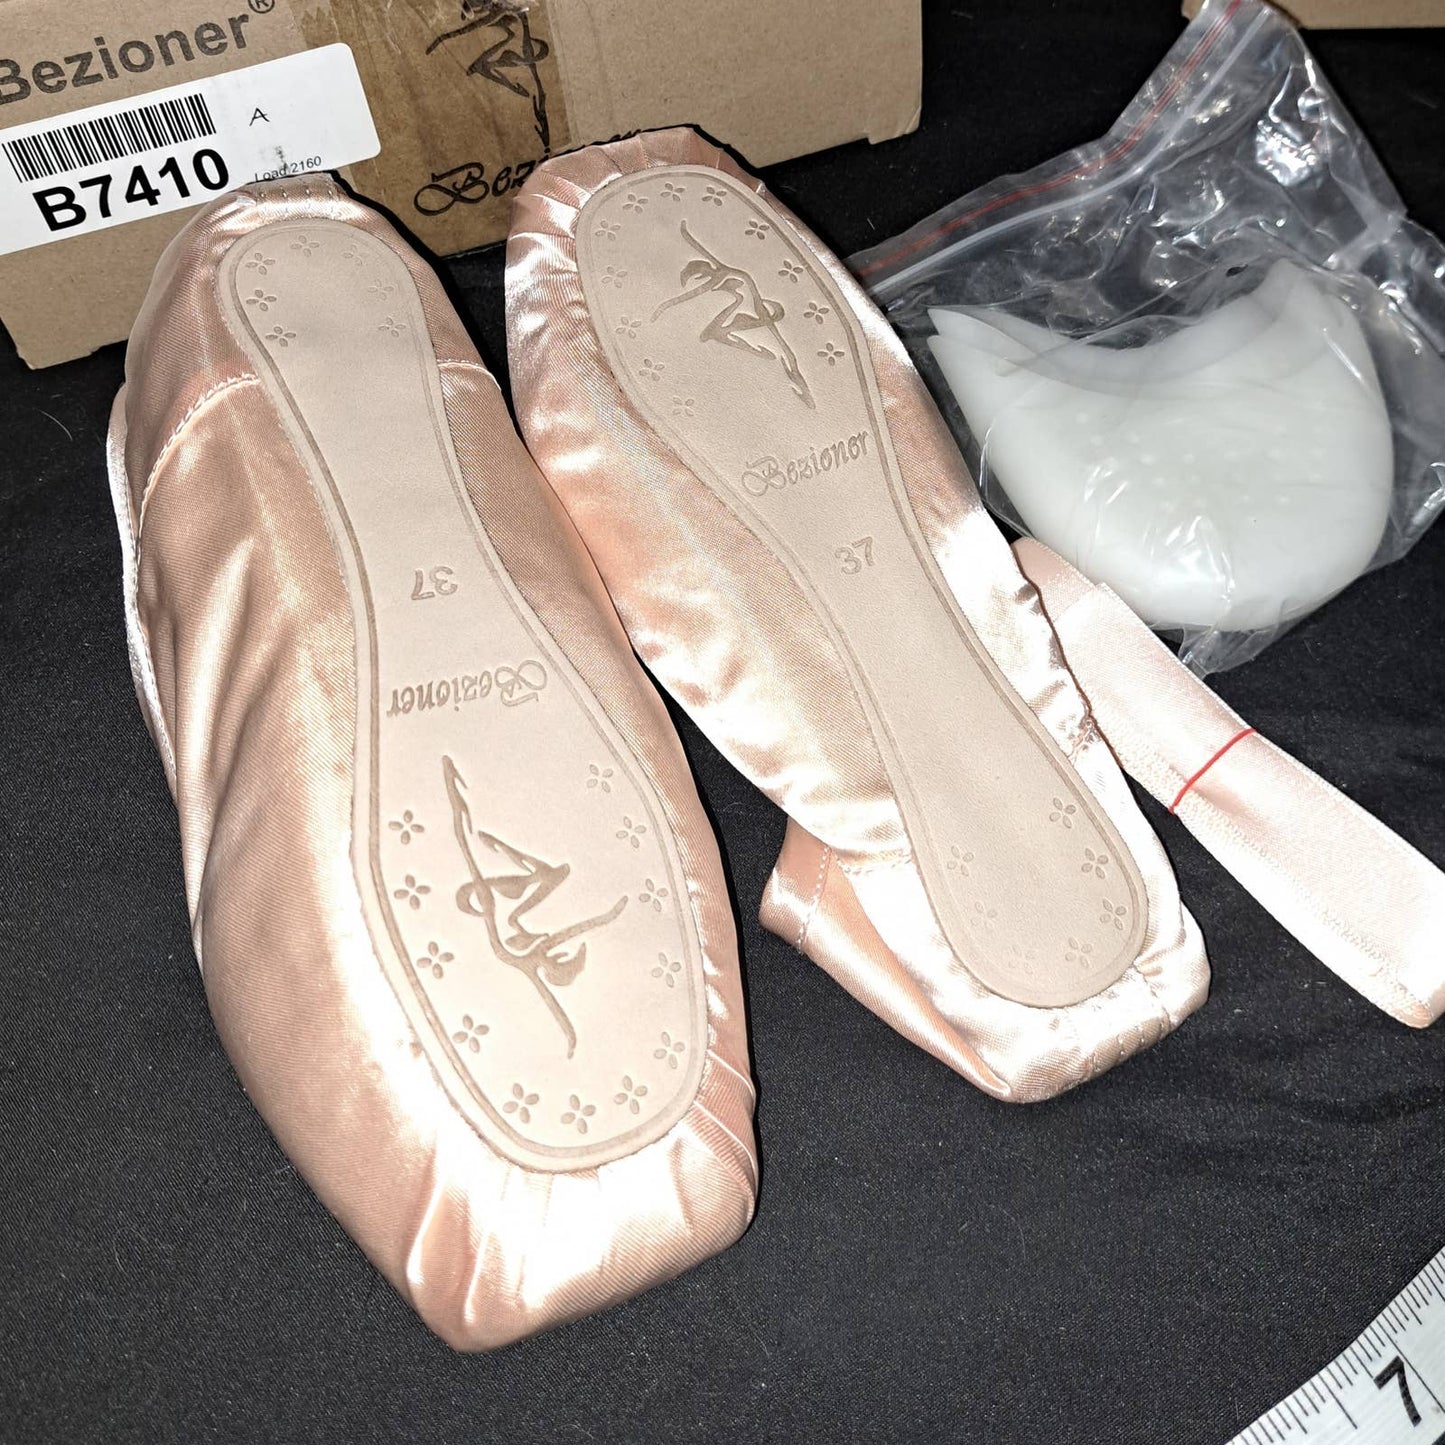 NIB-SZ 37EU/6.5 US Bezioner Pink Satin Ballet Pointe Dance Shoes Ribbon-Toe Pads